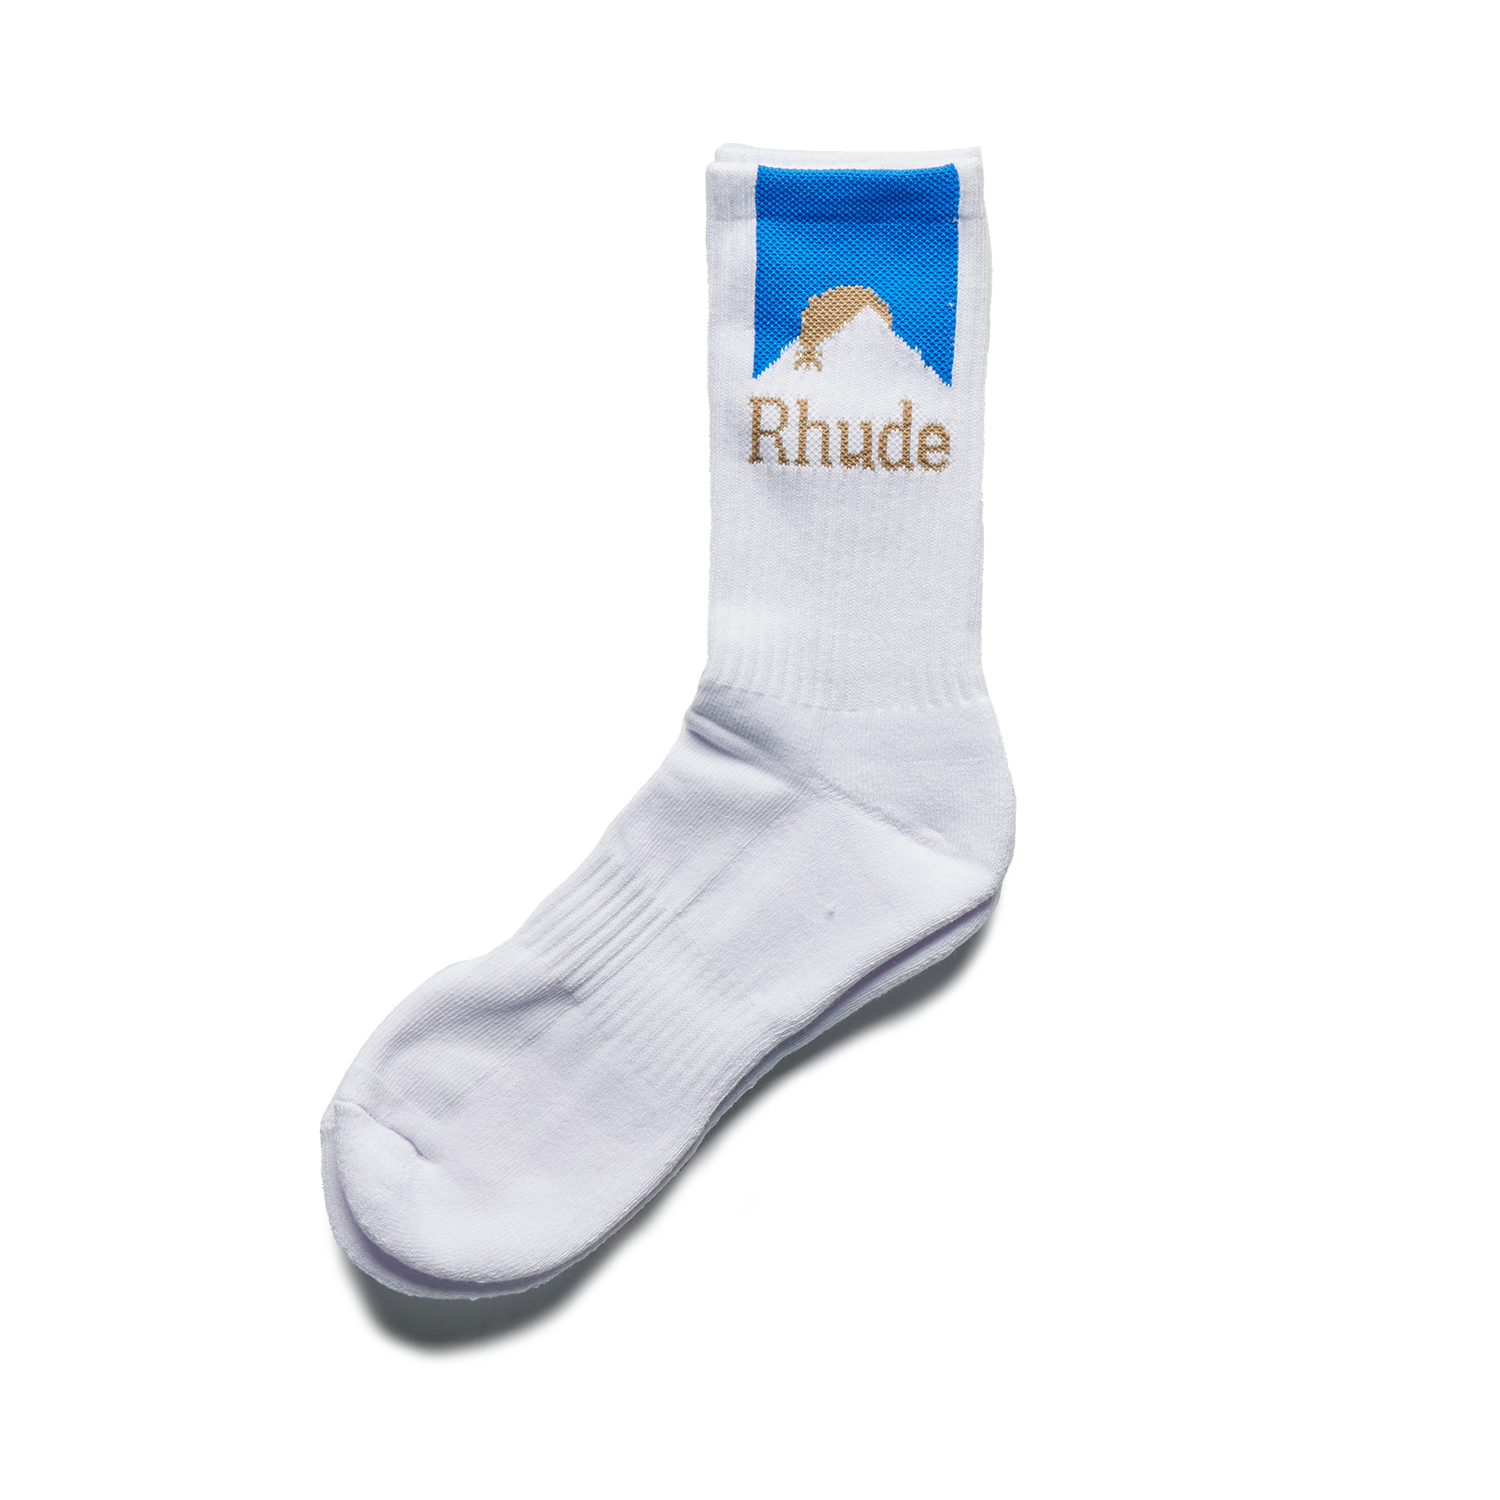 RHUDE - Moonlight Sock (White/Blue/Yellow) product image